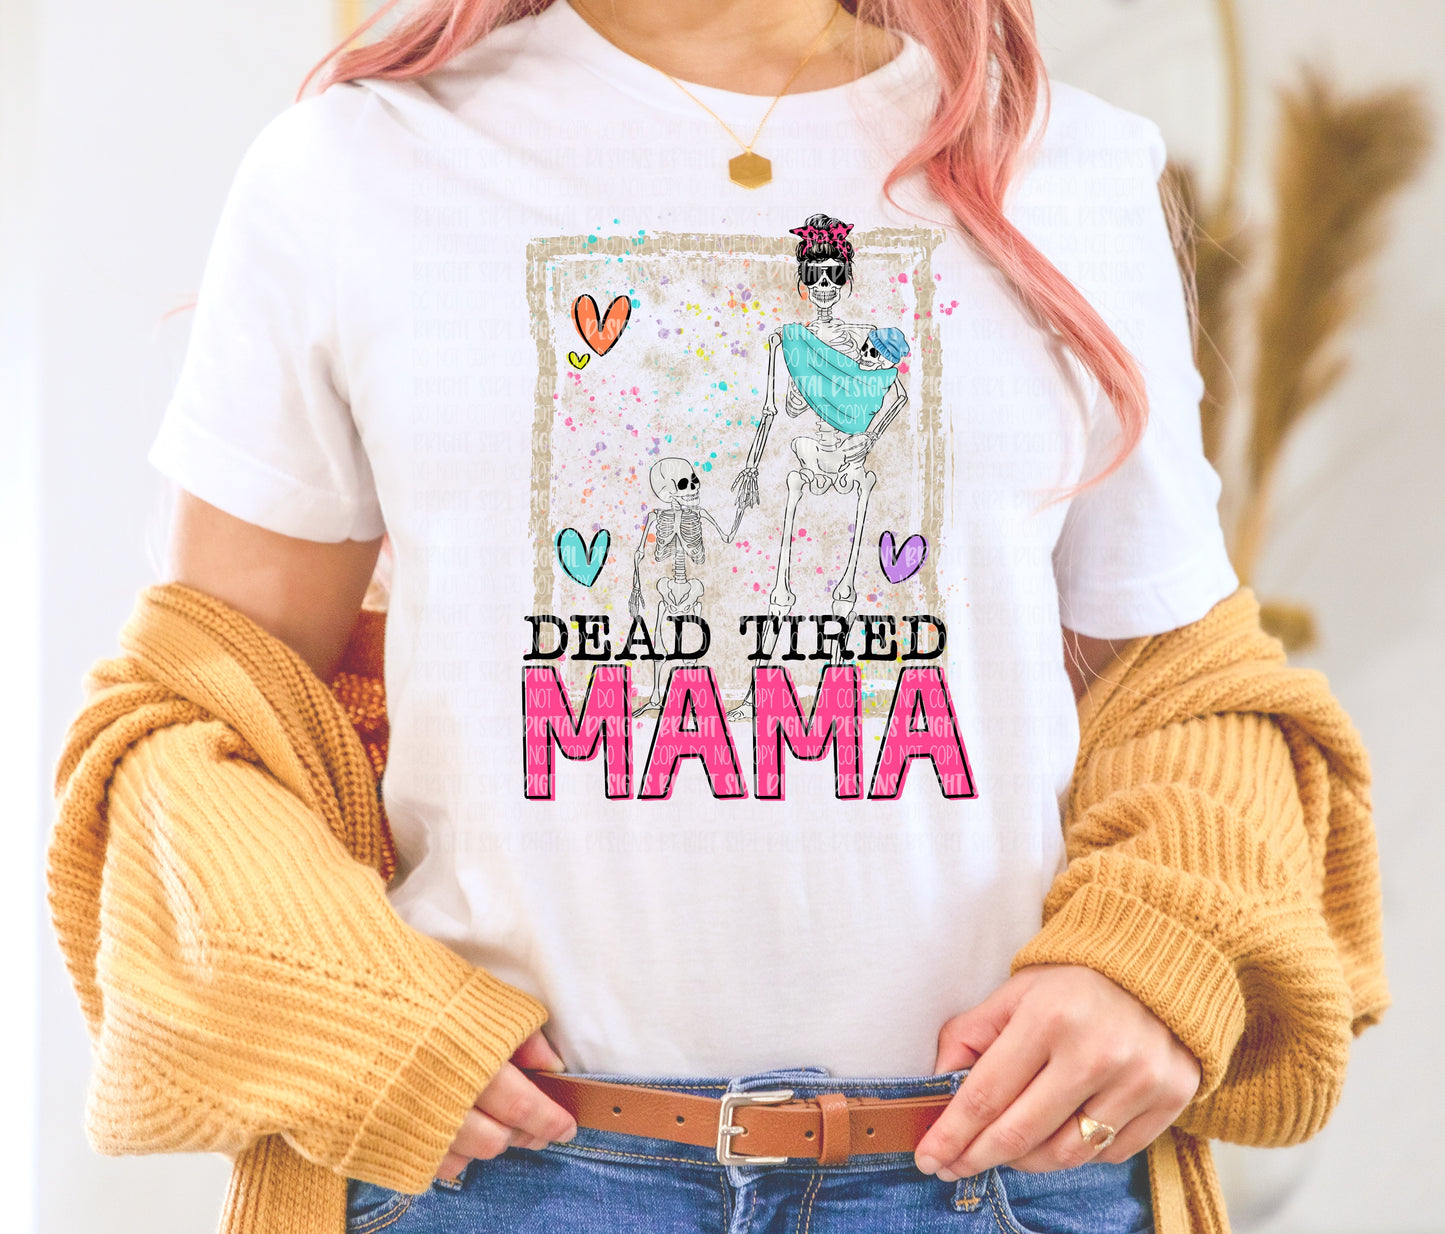 Dead tired mama -baby boy